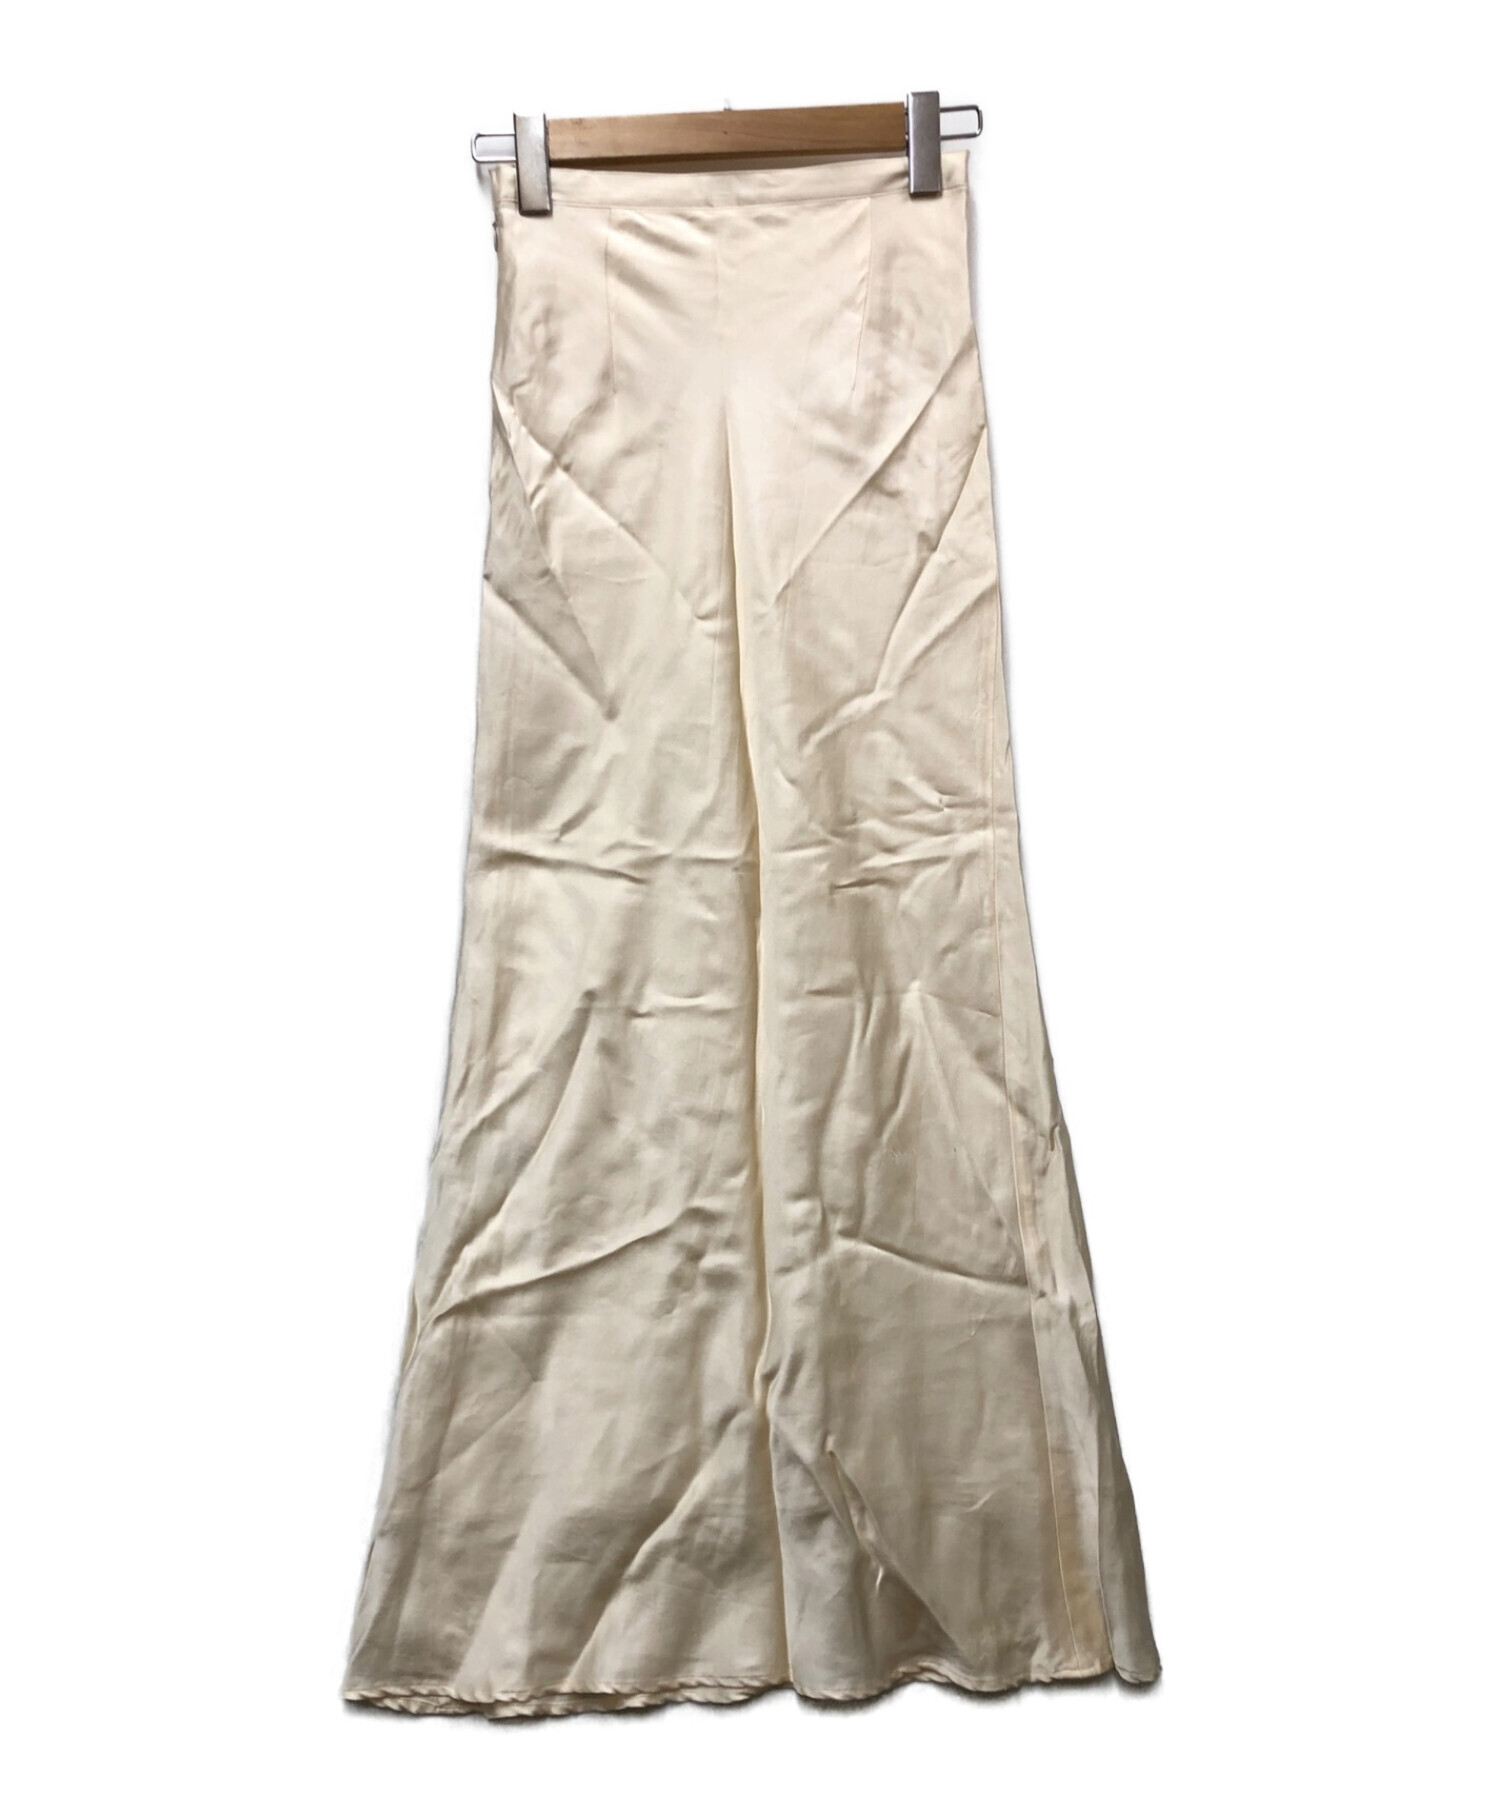 EDIT. FOR LULU silkスカート 34サイズ | www.fleettracktz.com